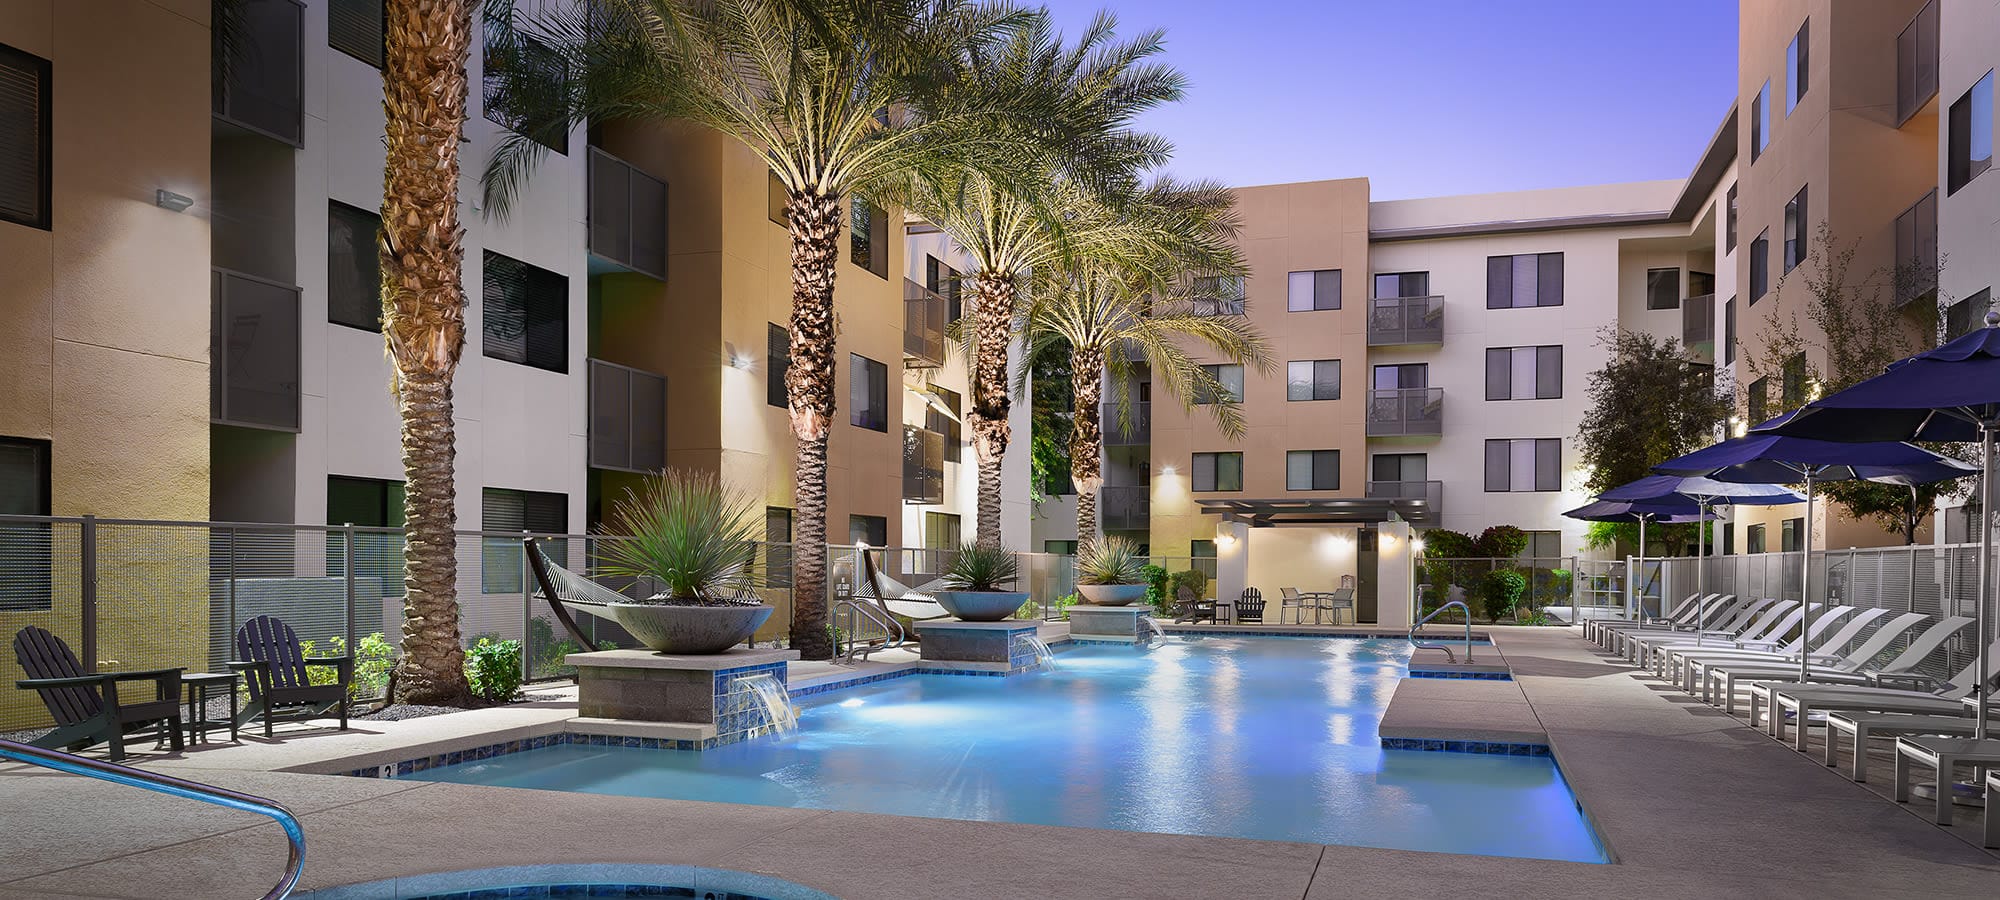 Resort-style pool at Cactus Forty-2 in Phoenix, Arizona